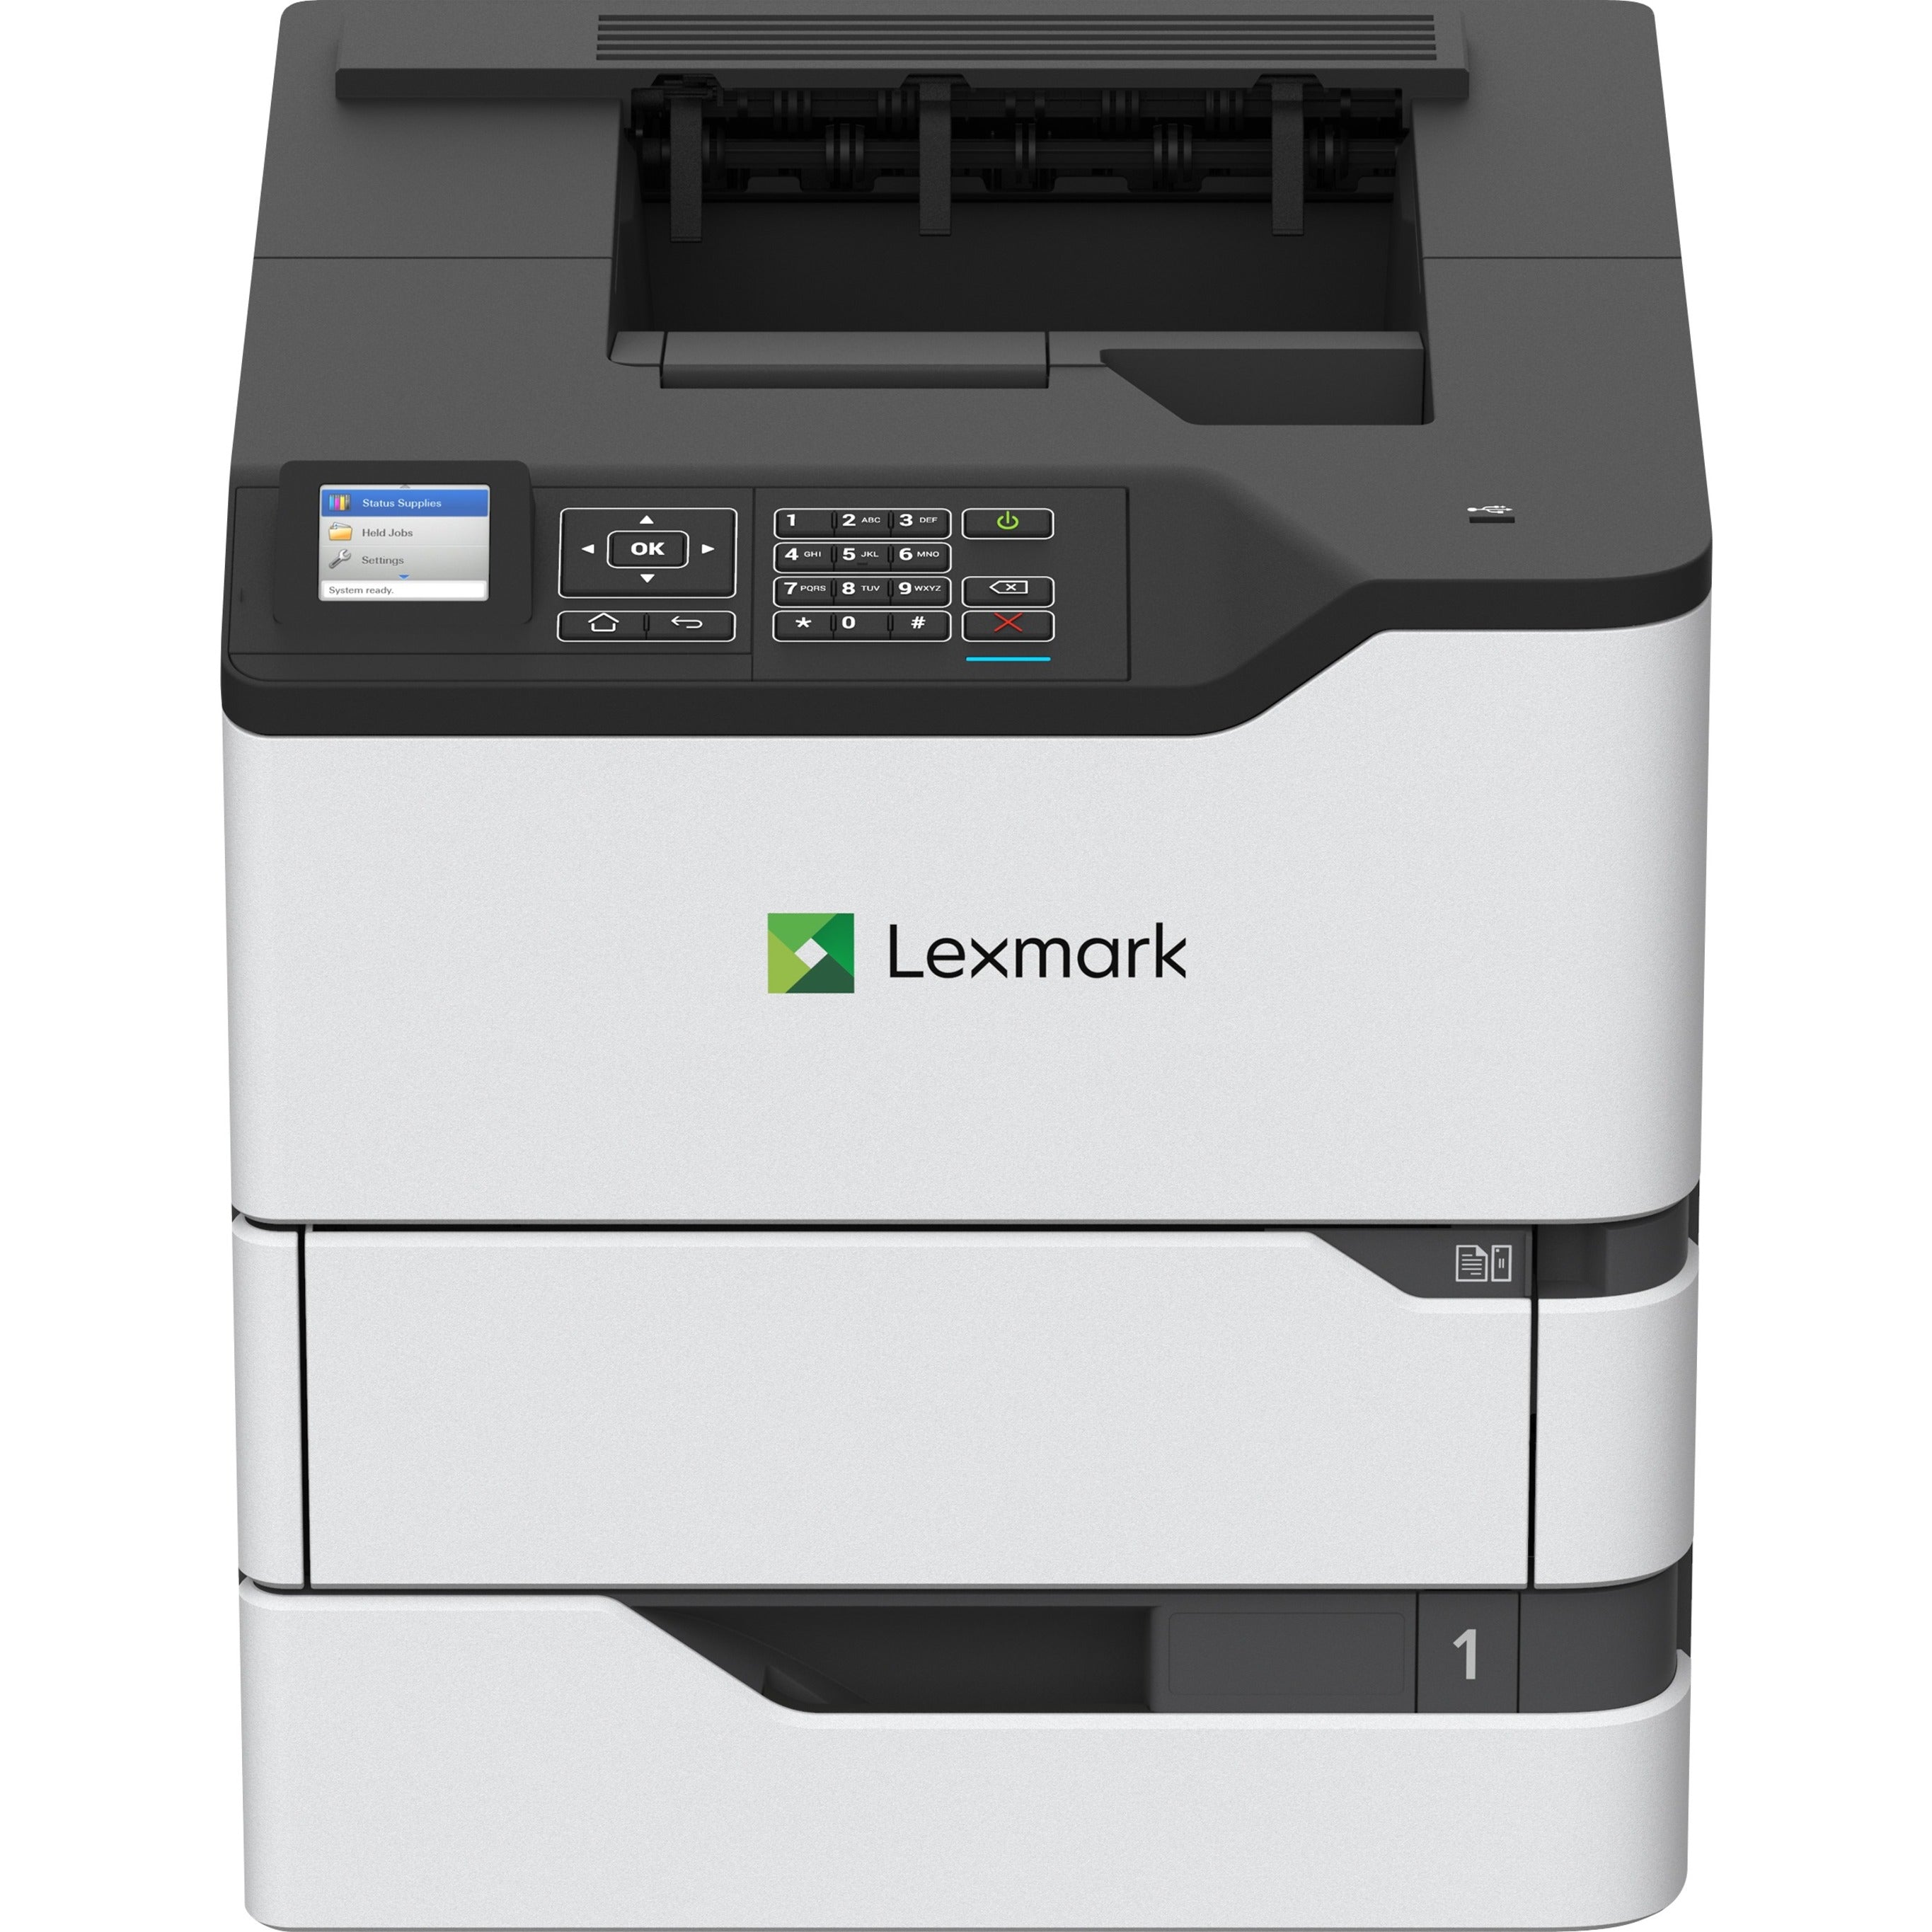 Lexmark 50G0180 MS823n Laser Printer, Monochrome, 65 ppm, 1200 x 1200 dpi, USB, Ethernet, 650 Sheets